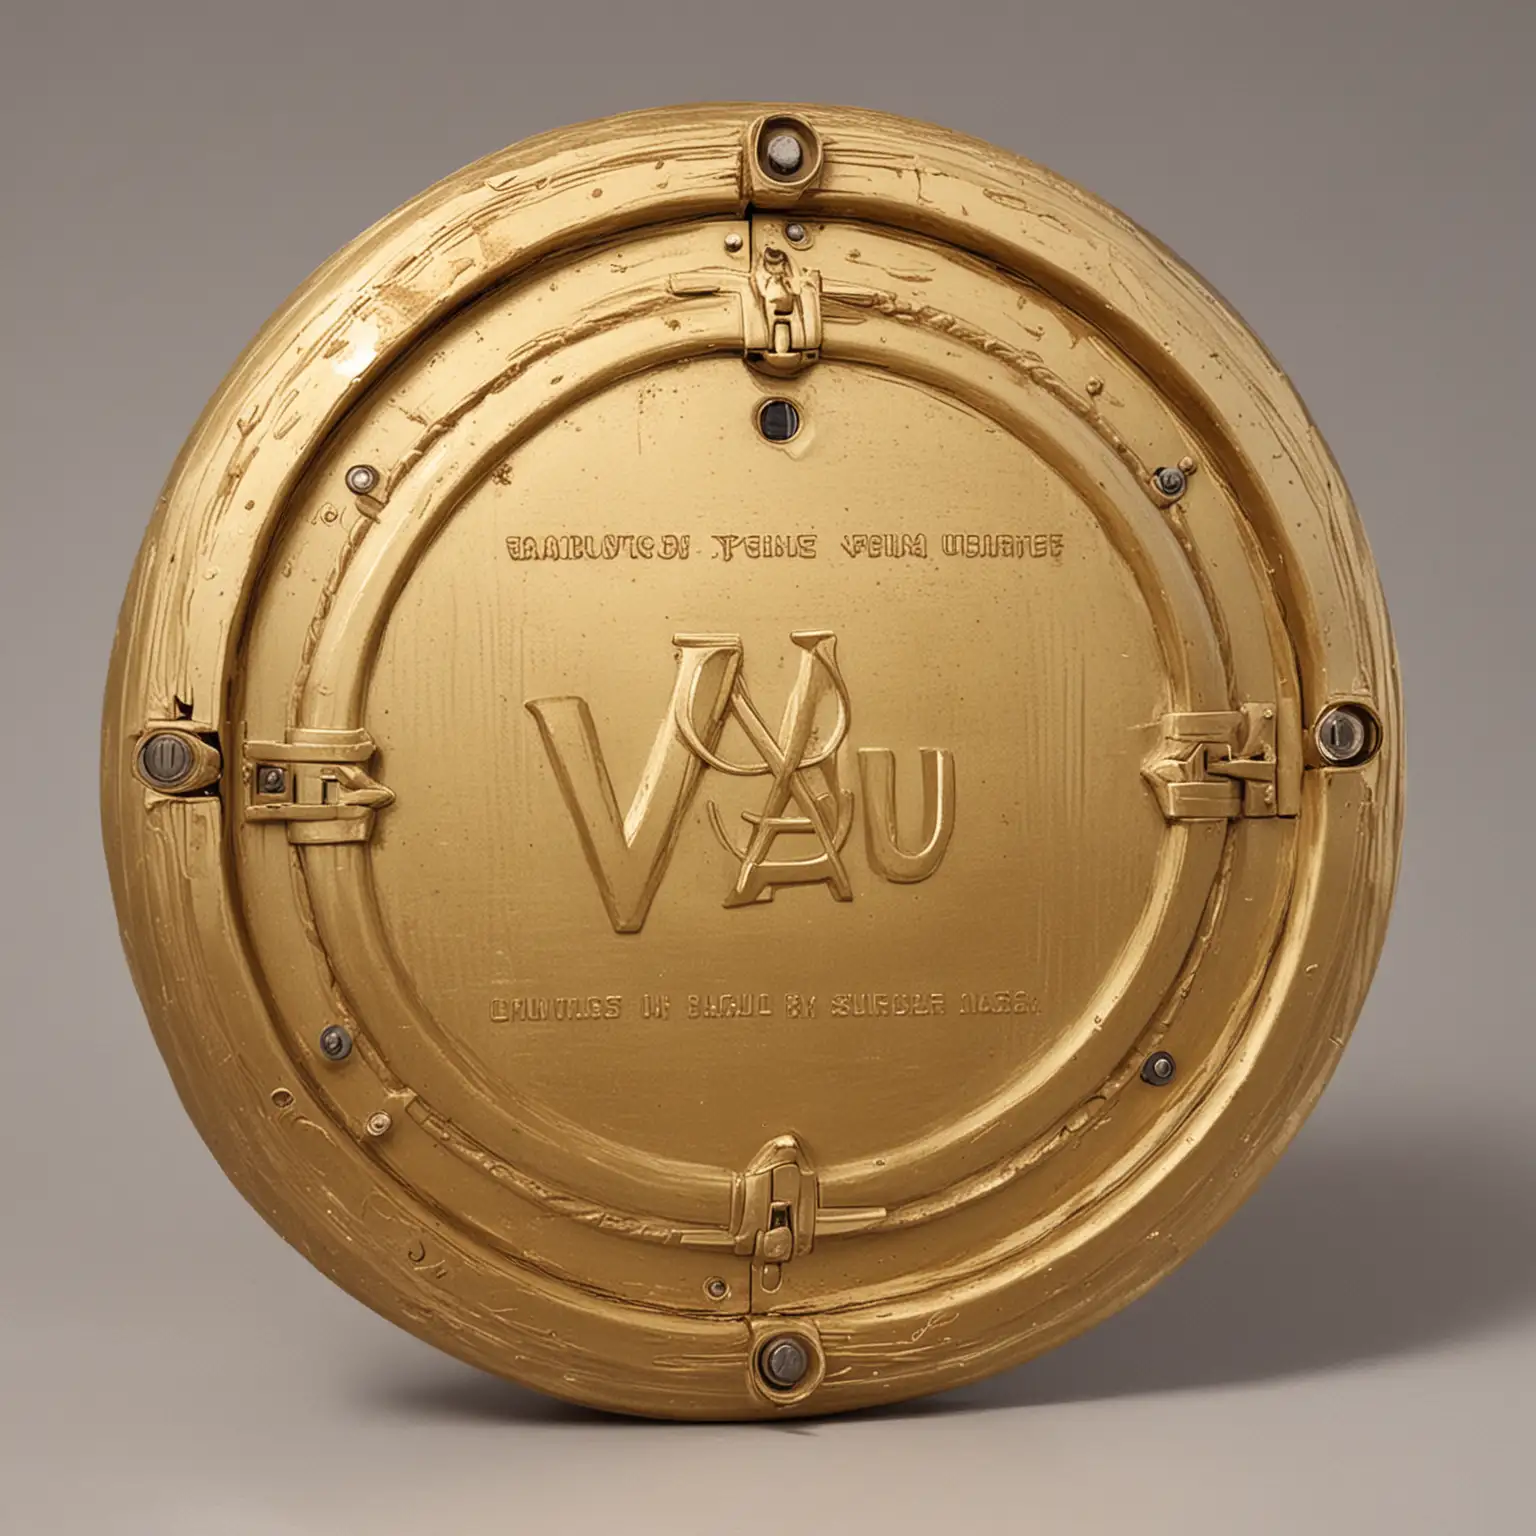 Golden Circular Safe with VAU Inscription